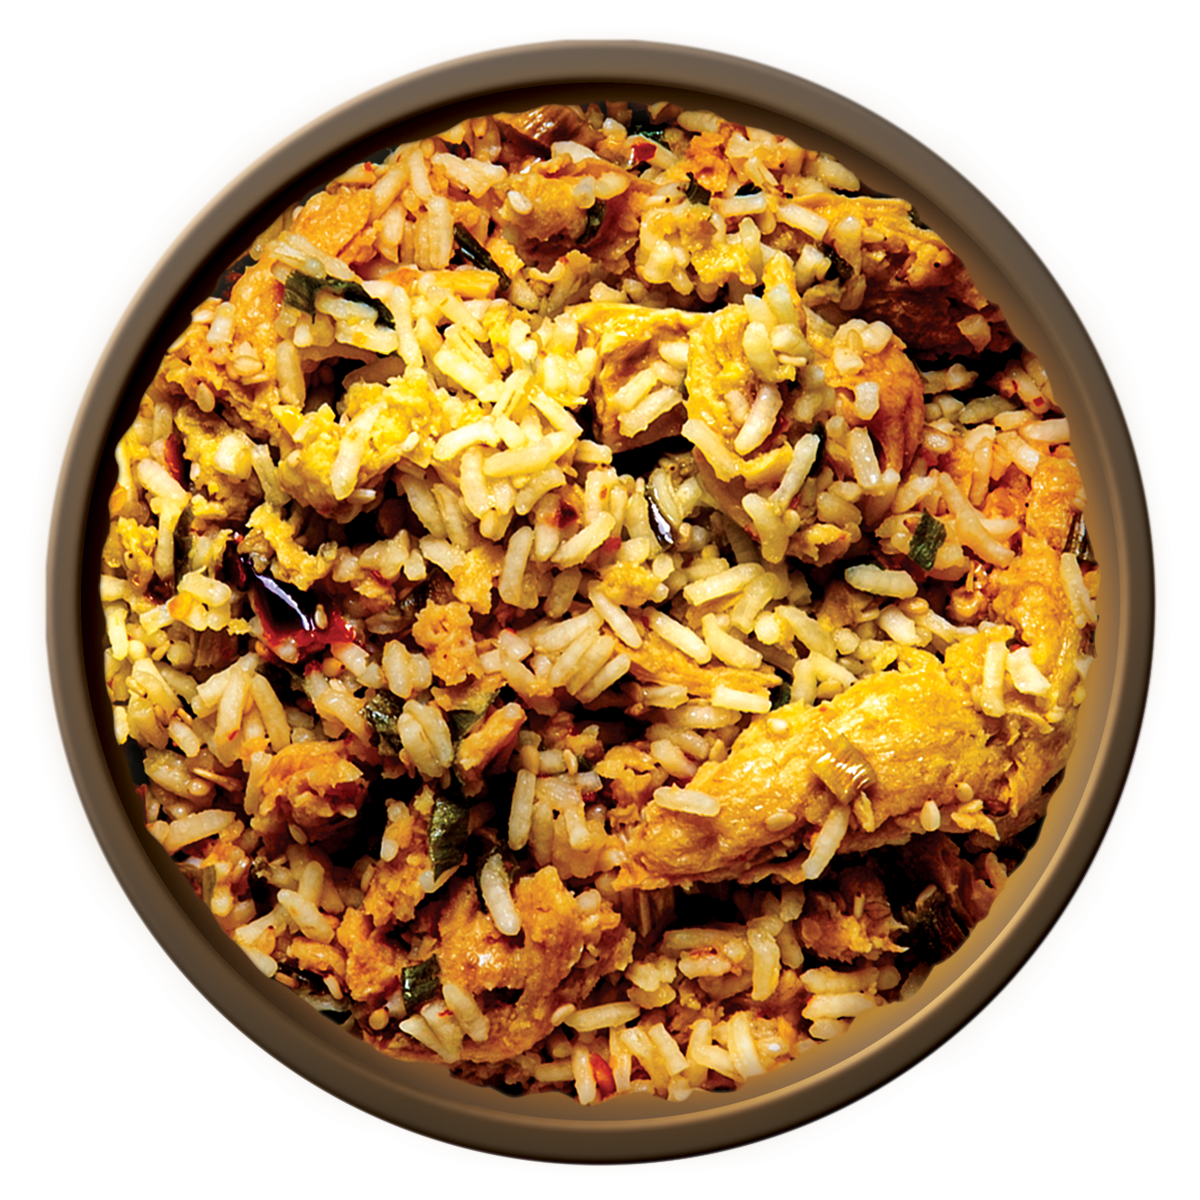 RightOnTrek general tsoy's mountain rice meal in bowl